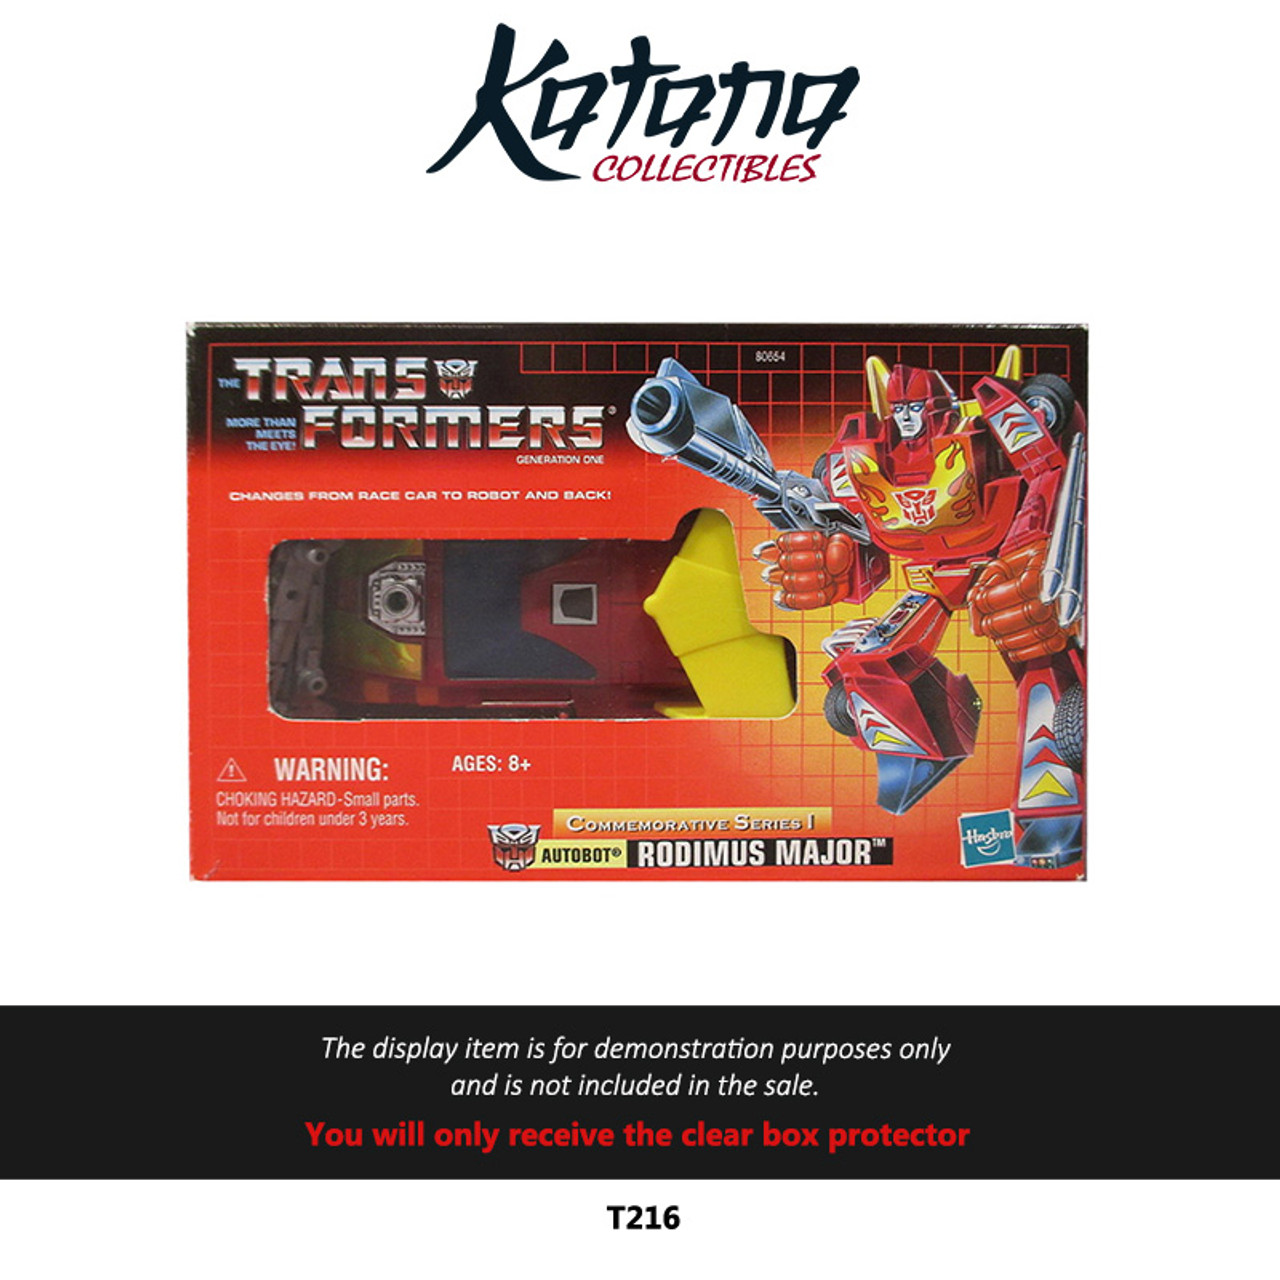 Katana Collectibles Protector For Transformers Commemorative Series I Rodimus Major Figure